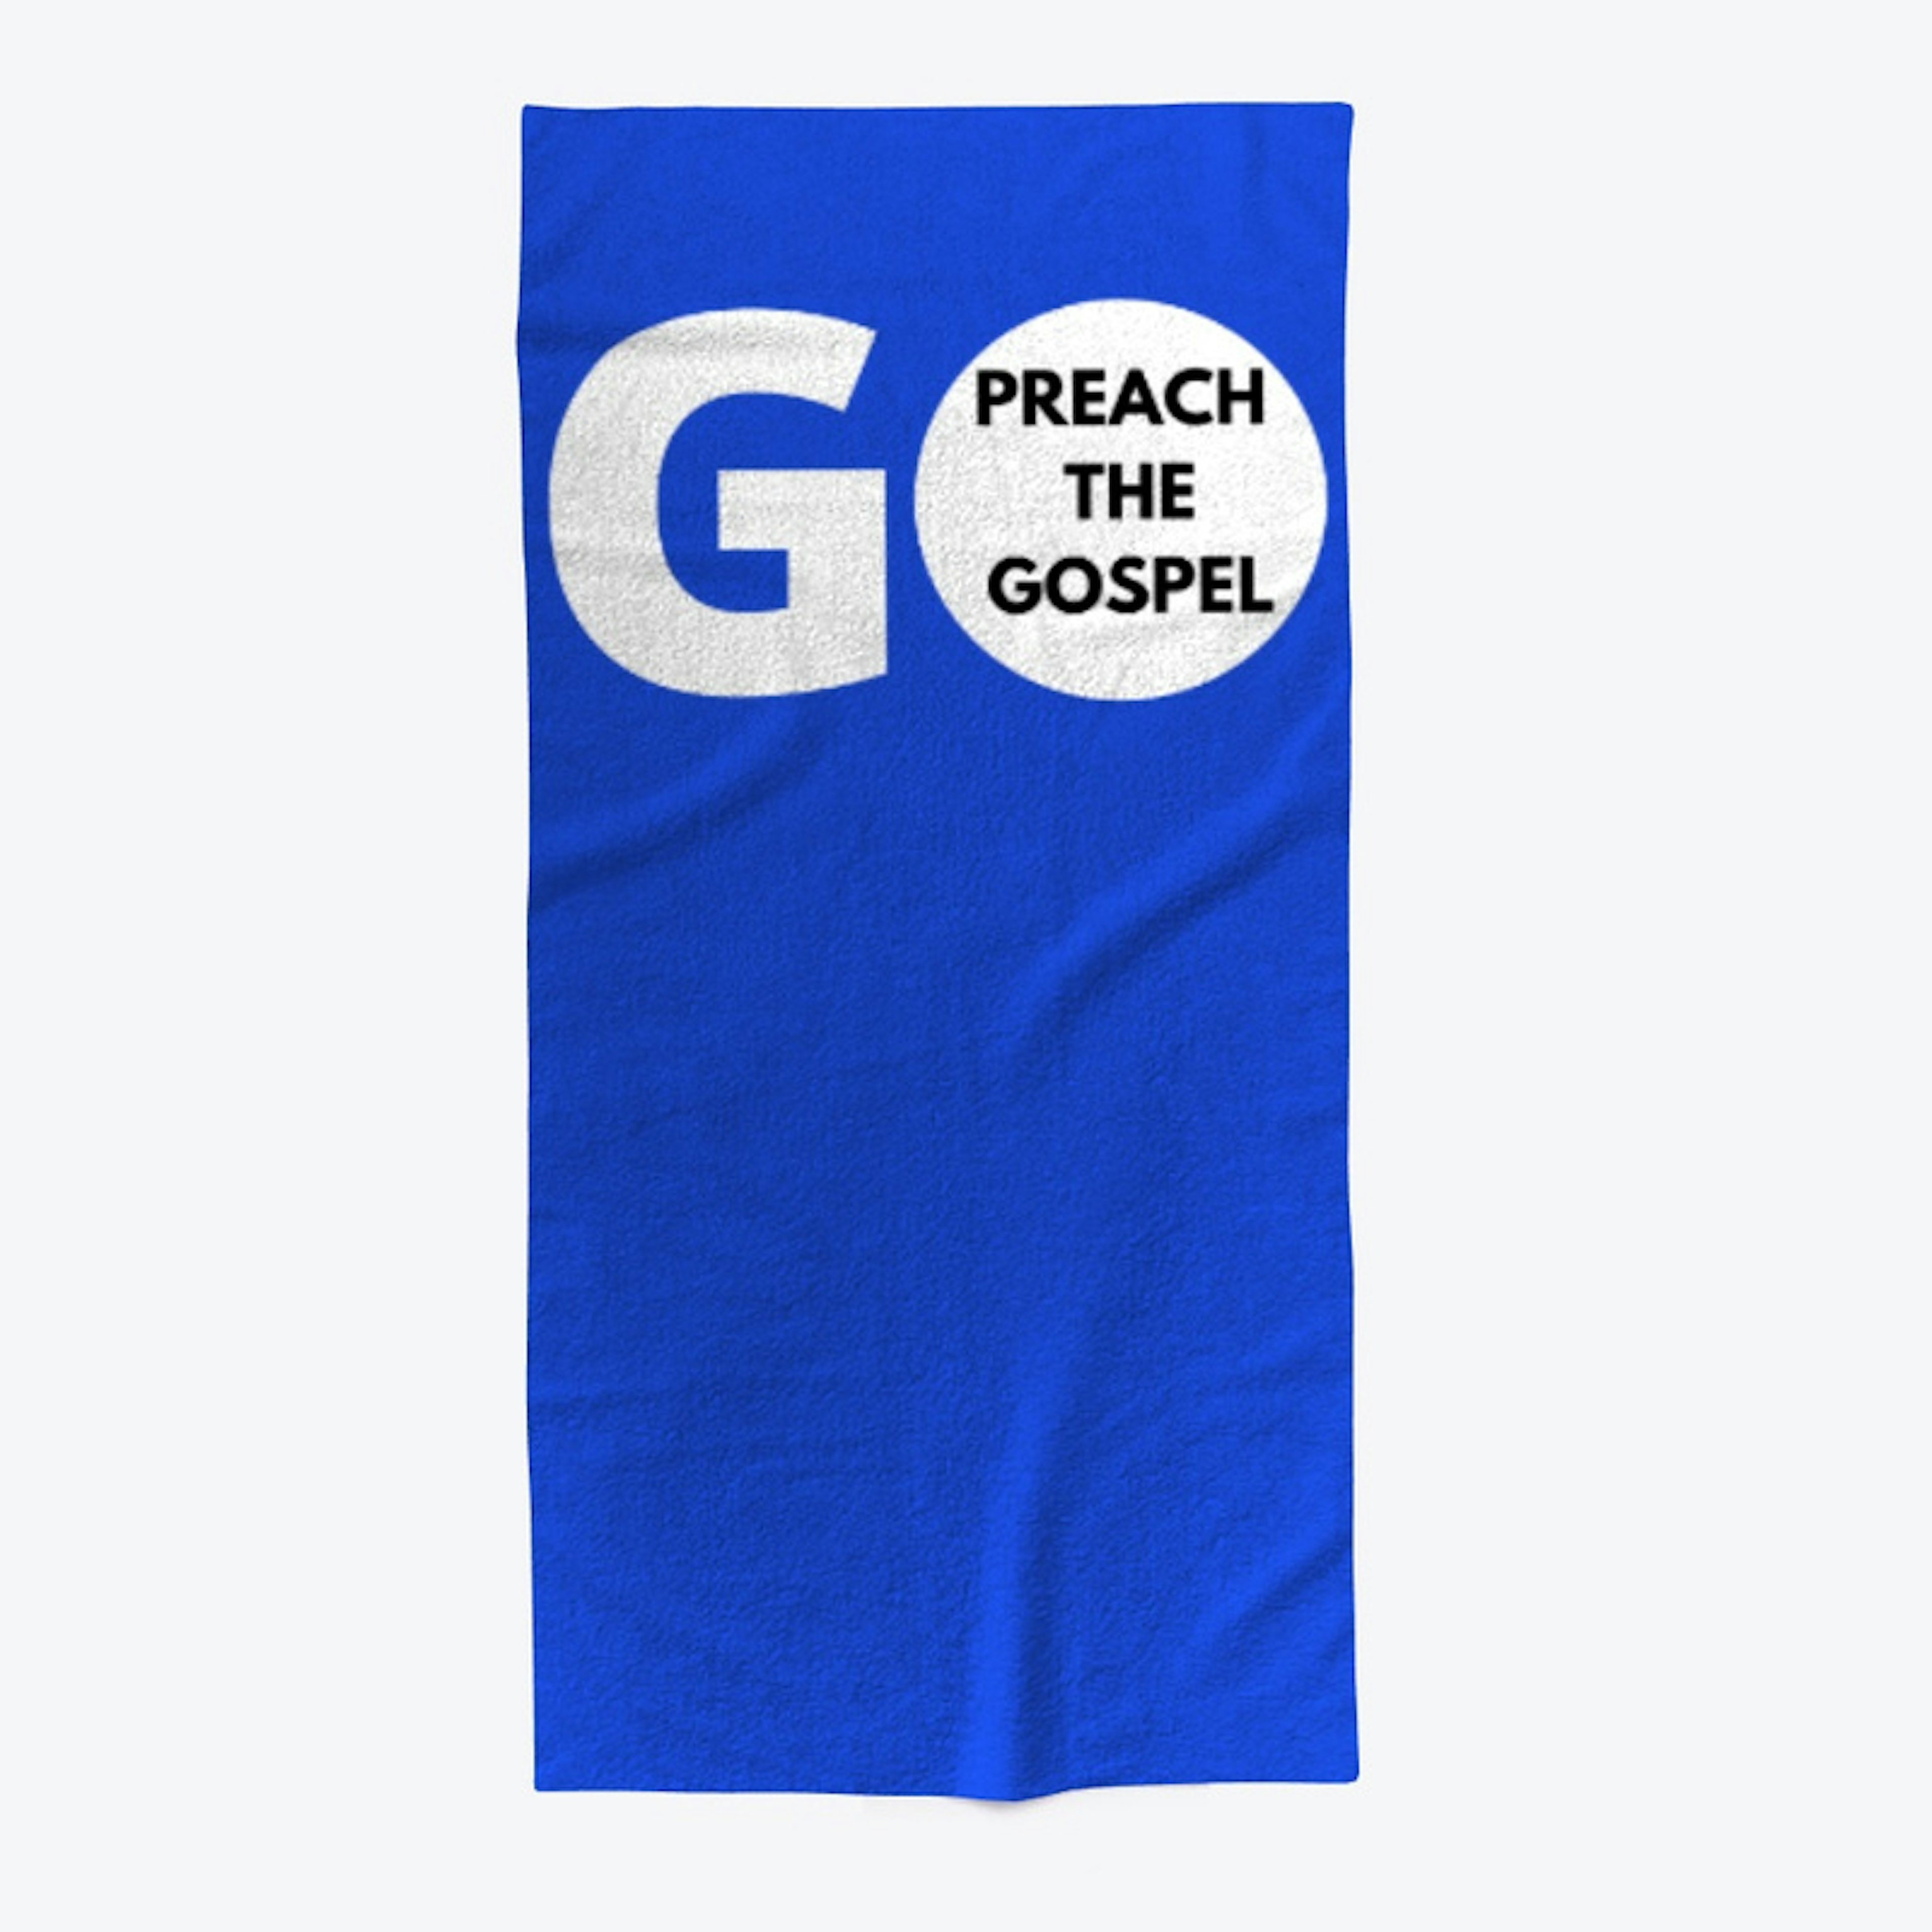 Go Preach the Gospel